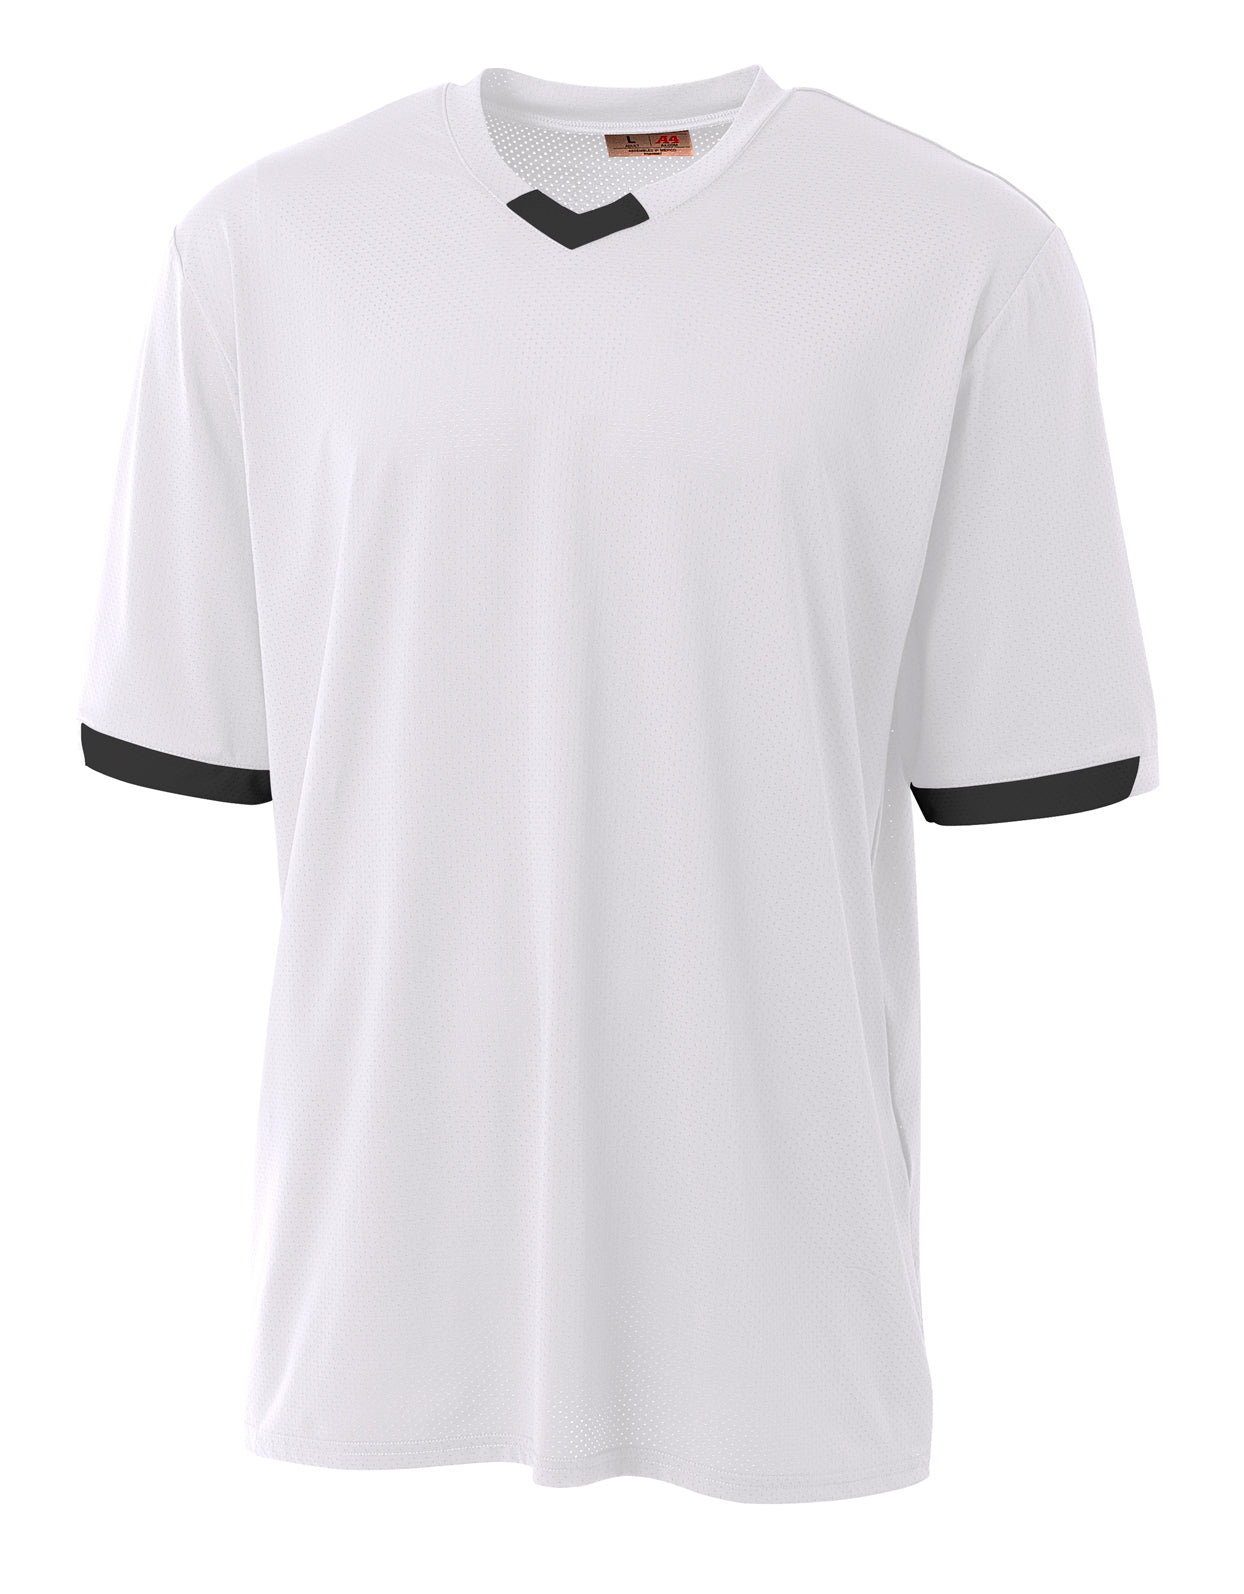 White/black A4 A4  Stretch Pro Baseball Jersey